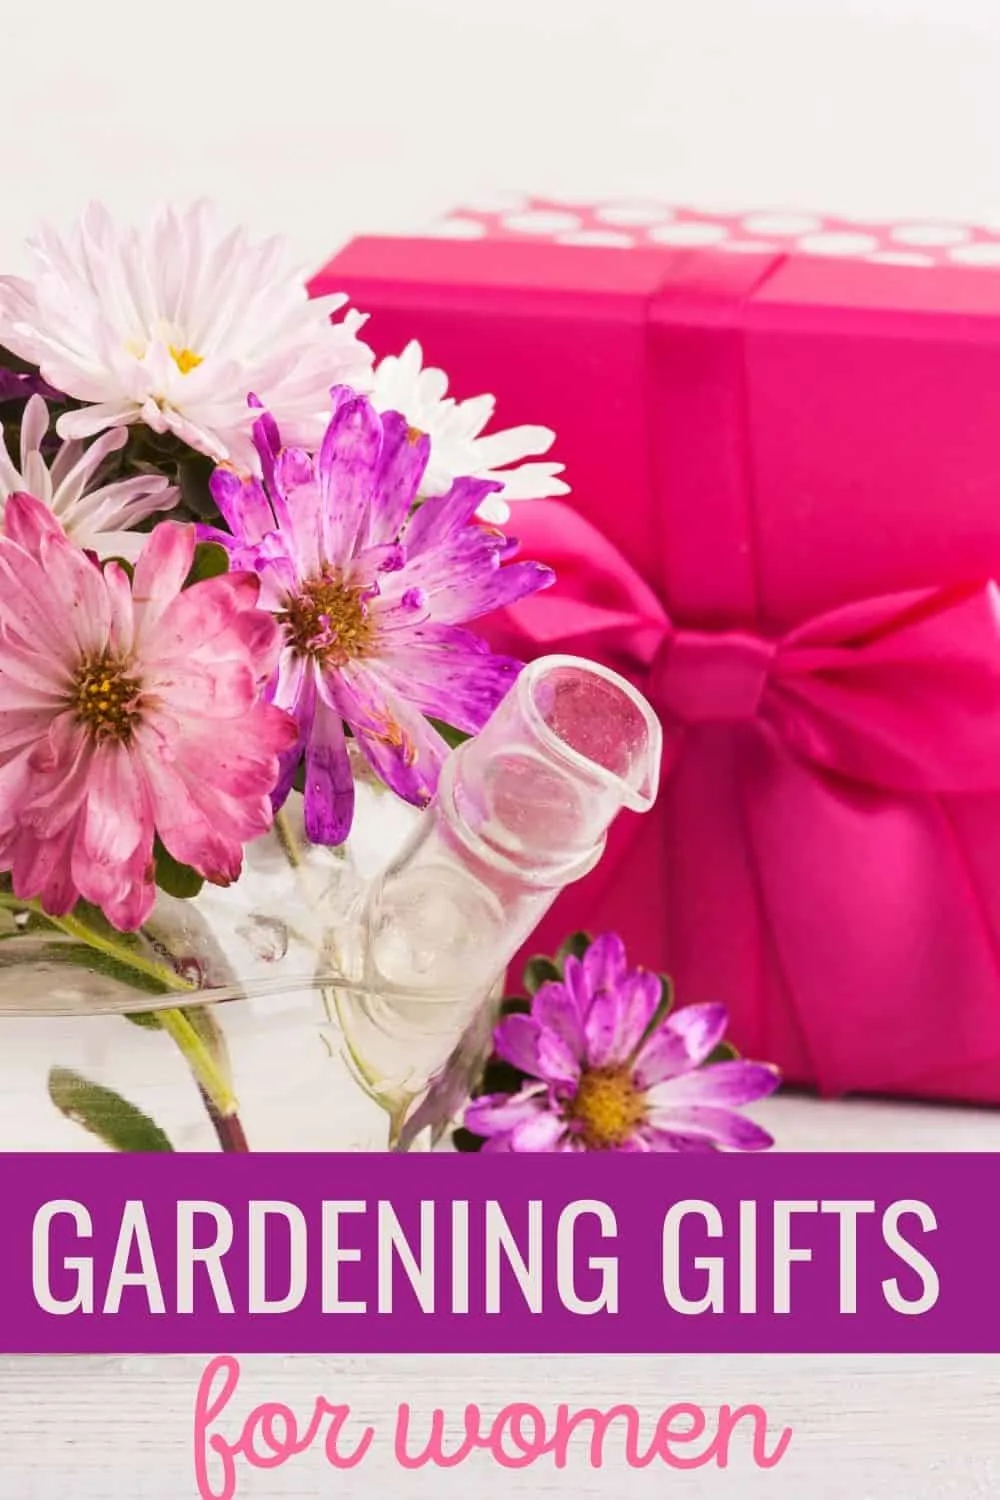 Gardening gifts for women